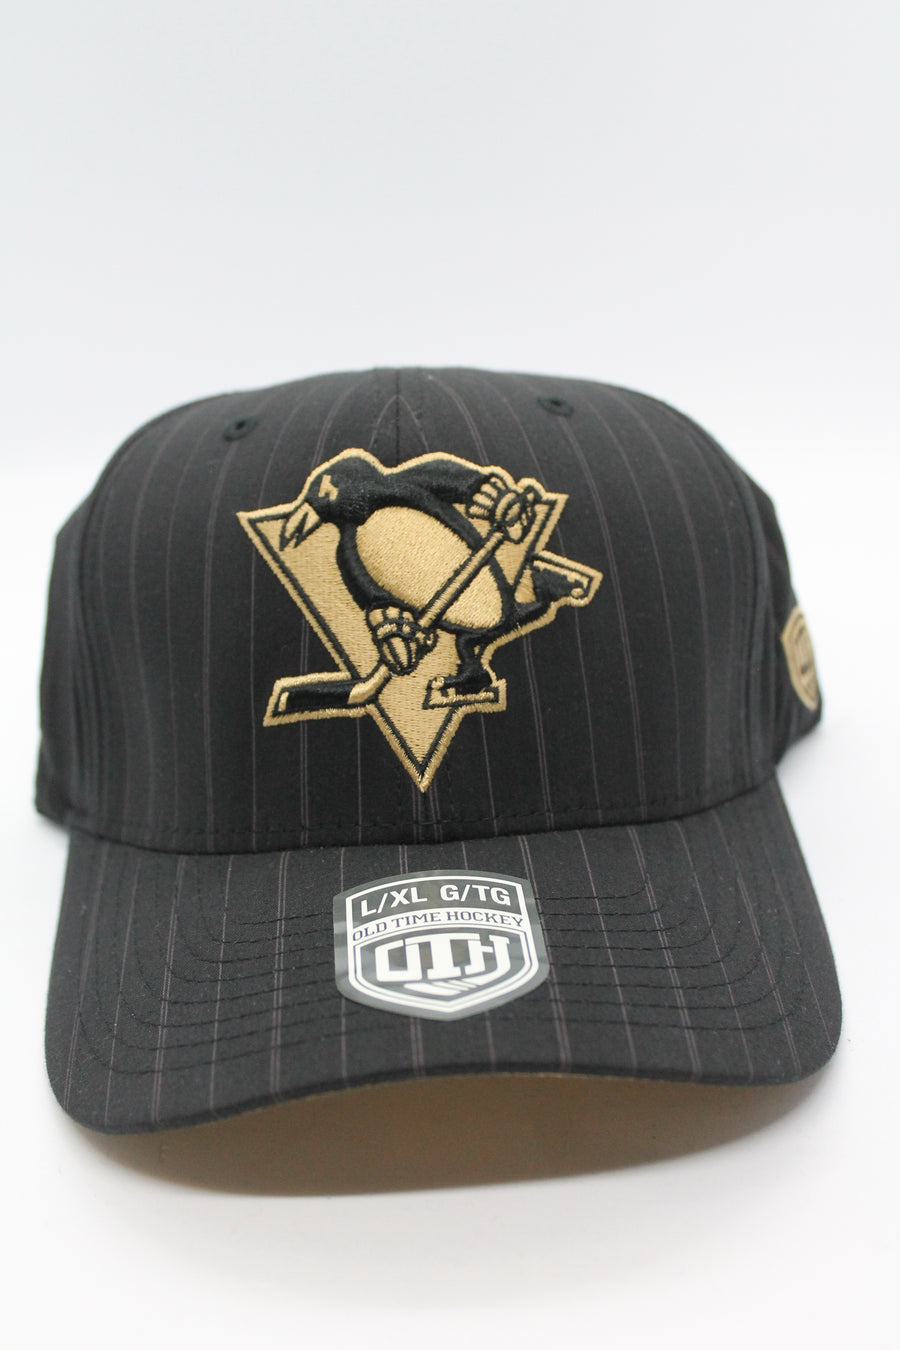 NHL Pittsburgh Penguins OTH Pinstripe Black/Gold Hat